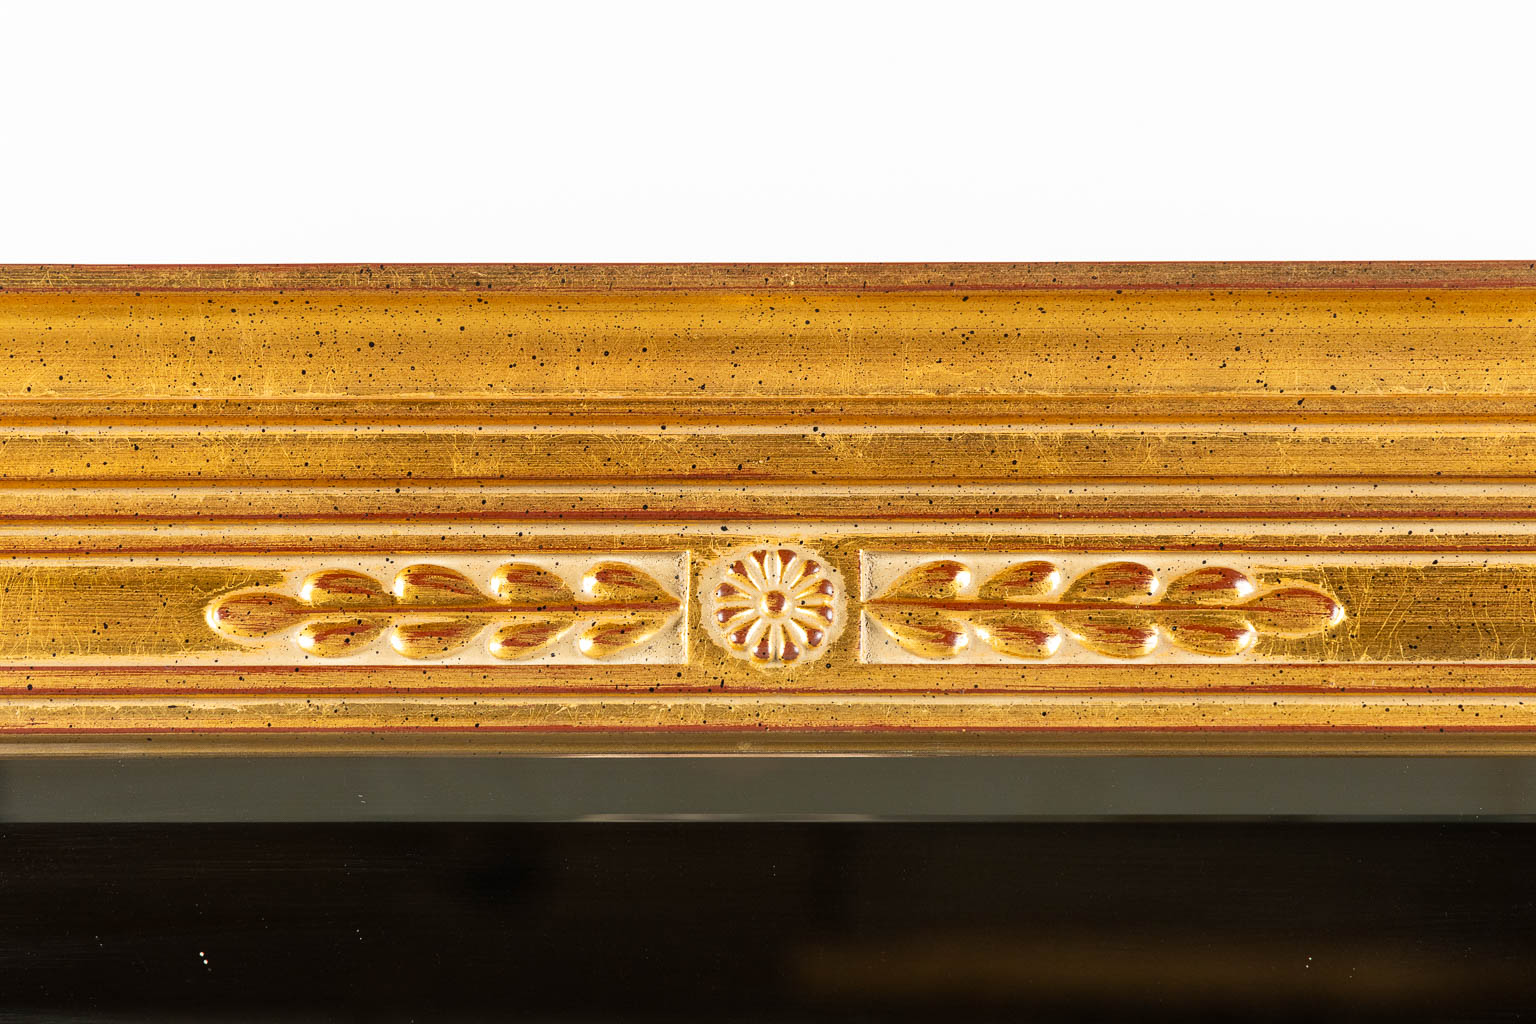 Deknudt, a mirror, gilt wood in Empire style. (W:74 x H:102 cm)